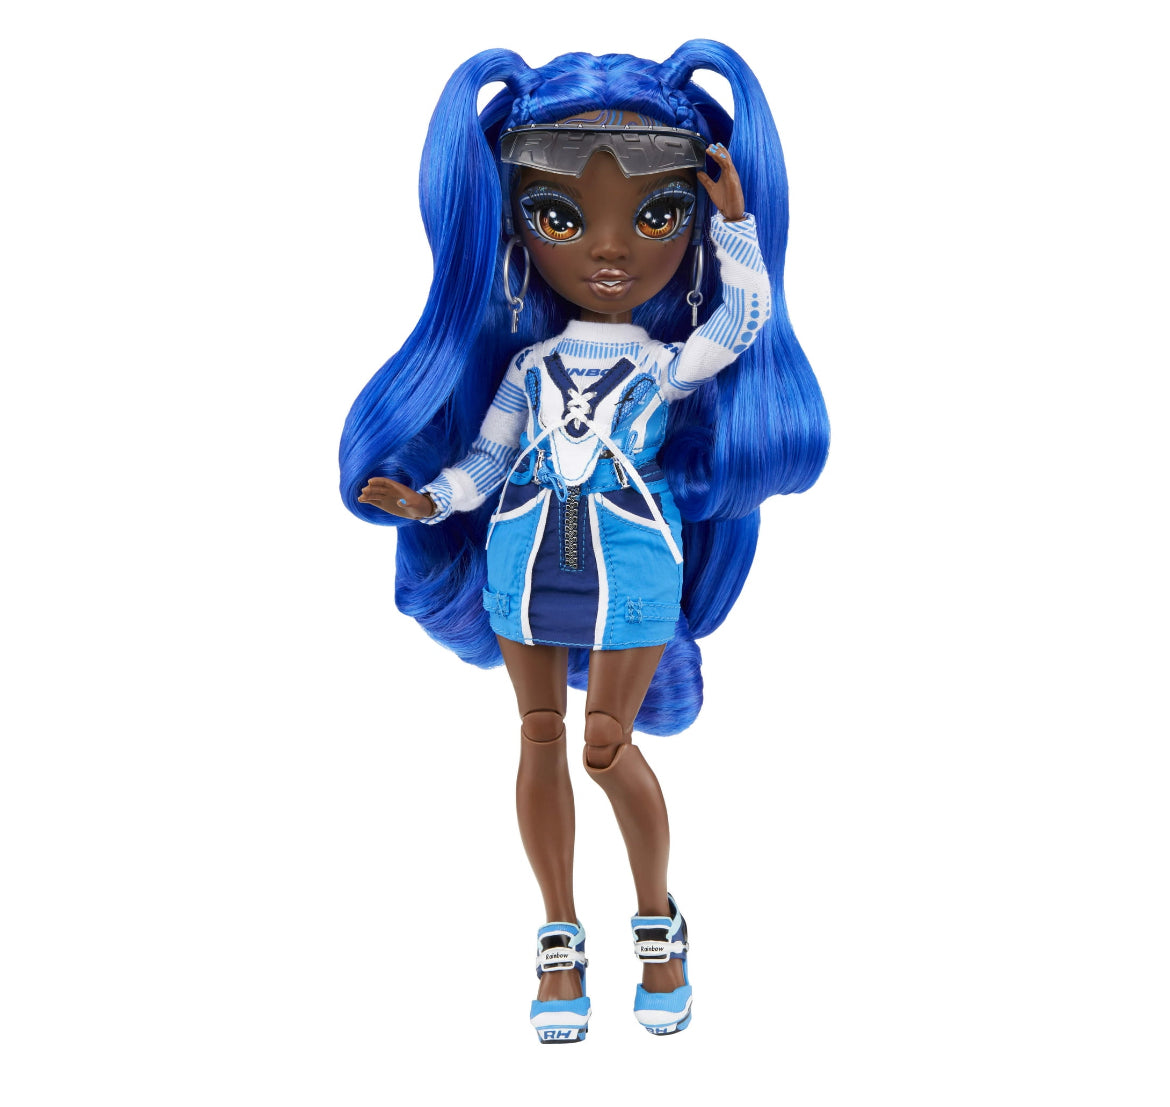 Rainbow High Coco Vanderbalt- Cobalt Blue Fashion Doll 57832